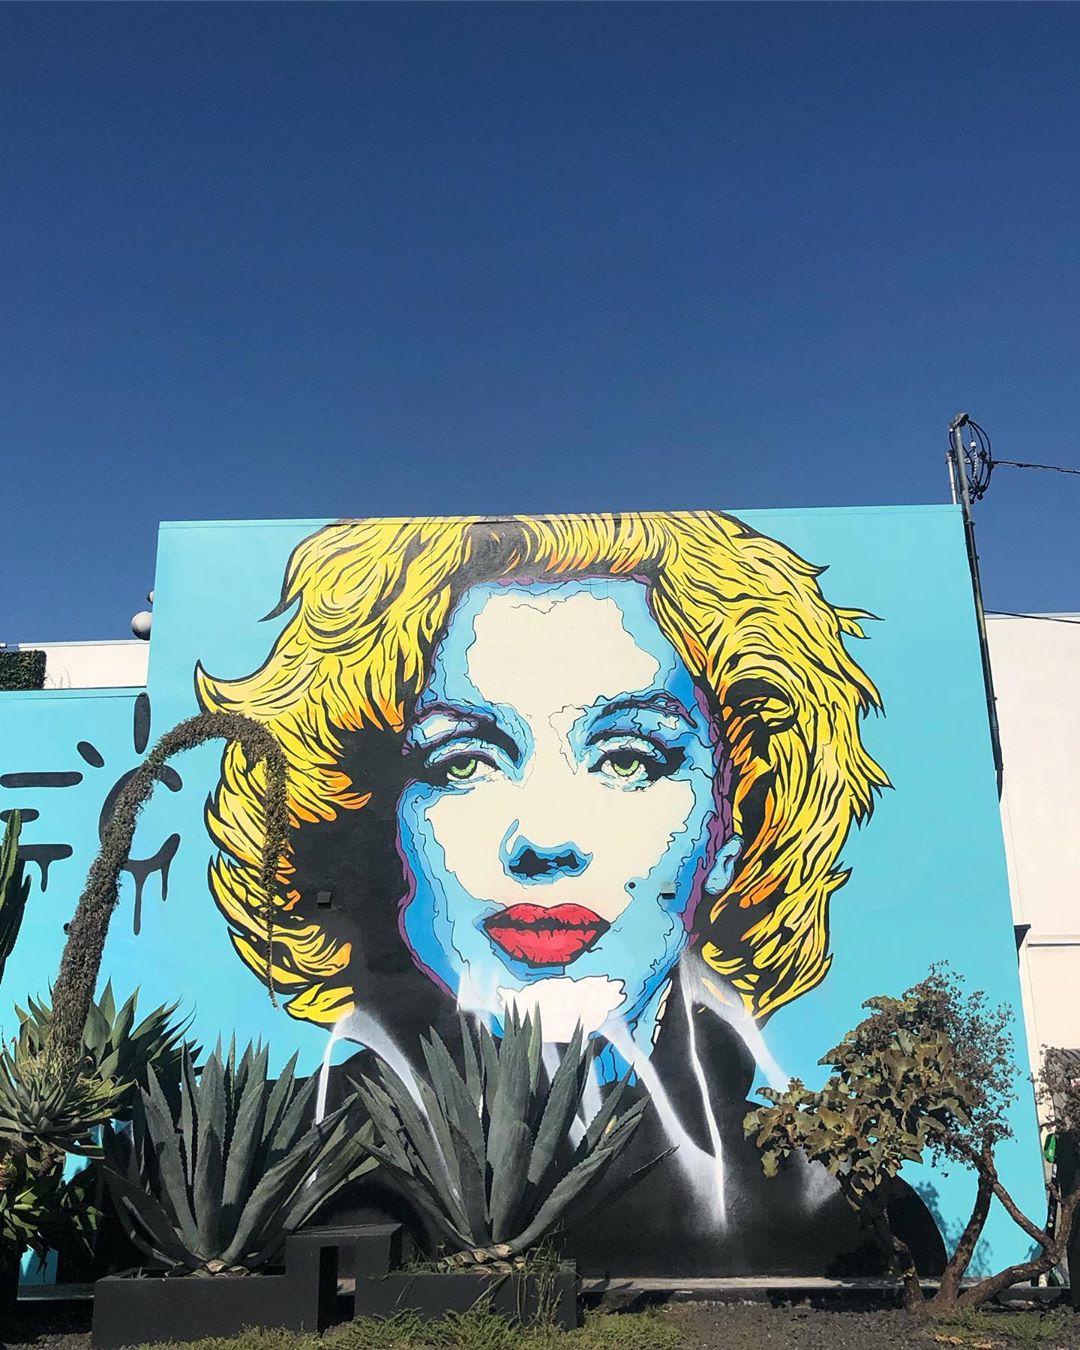 mural in Los Angeles by artist Alec Monopoly. Tagged: Marilyn Monroe